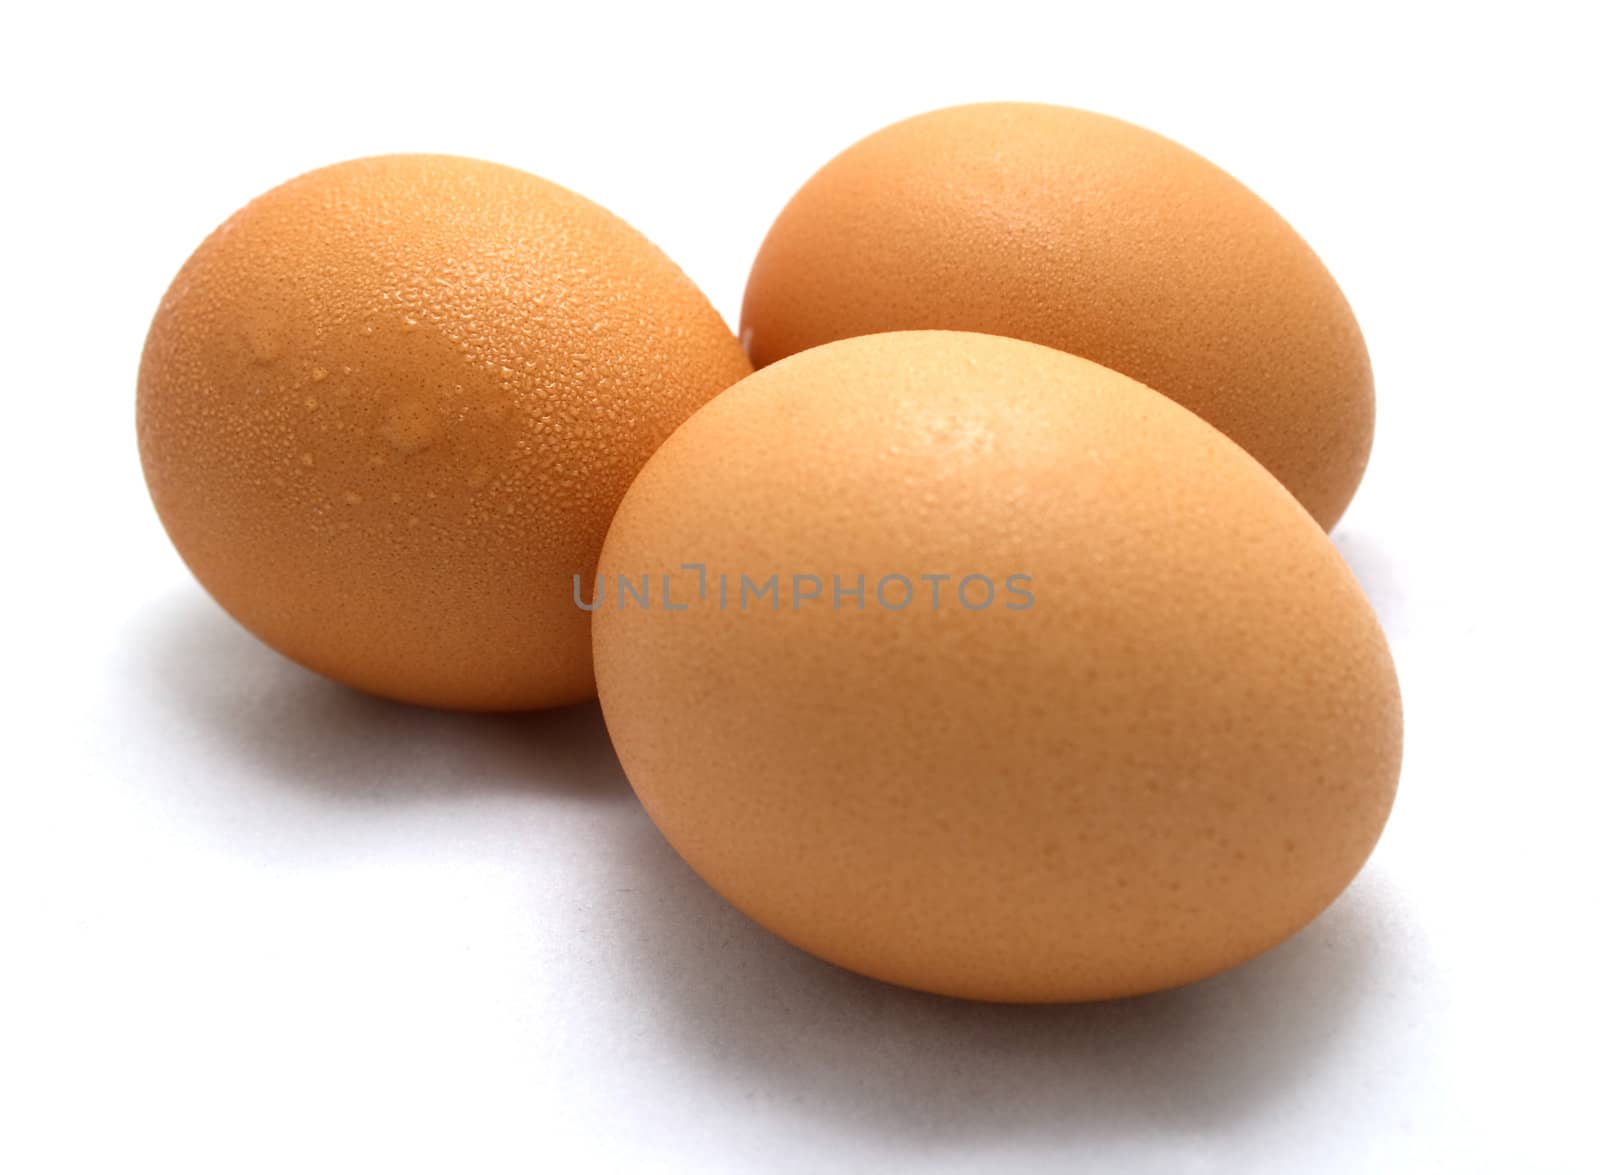 Three eggs on white background